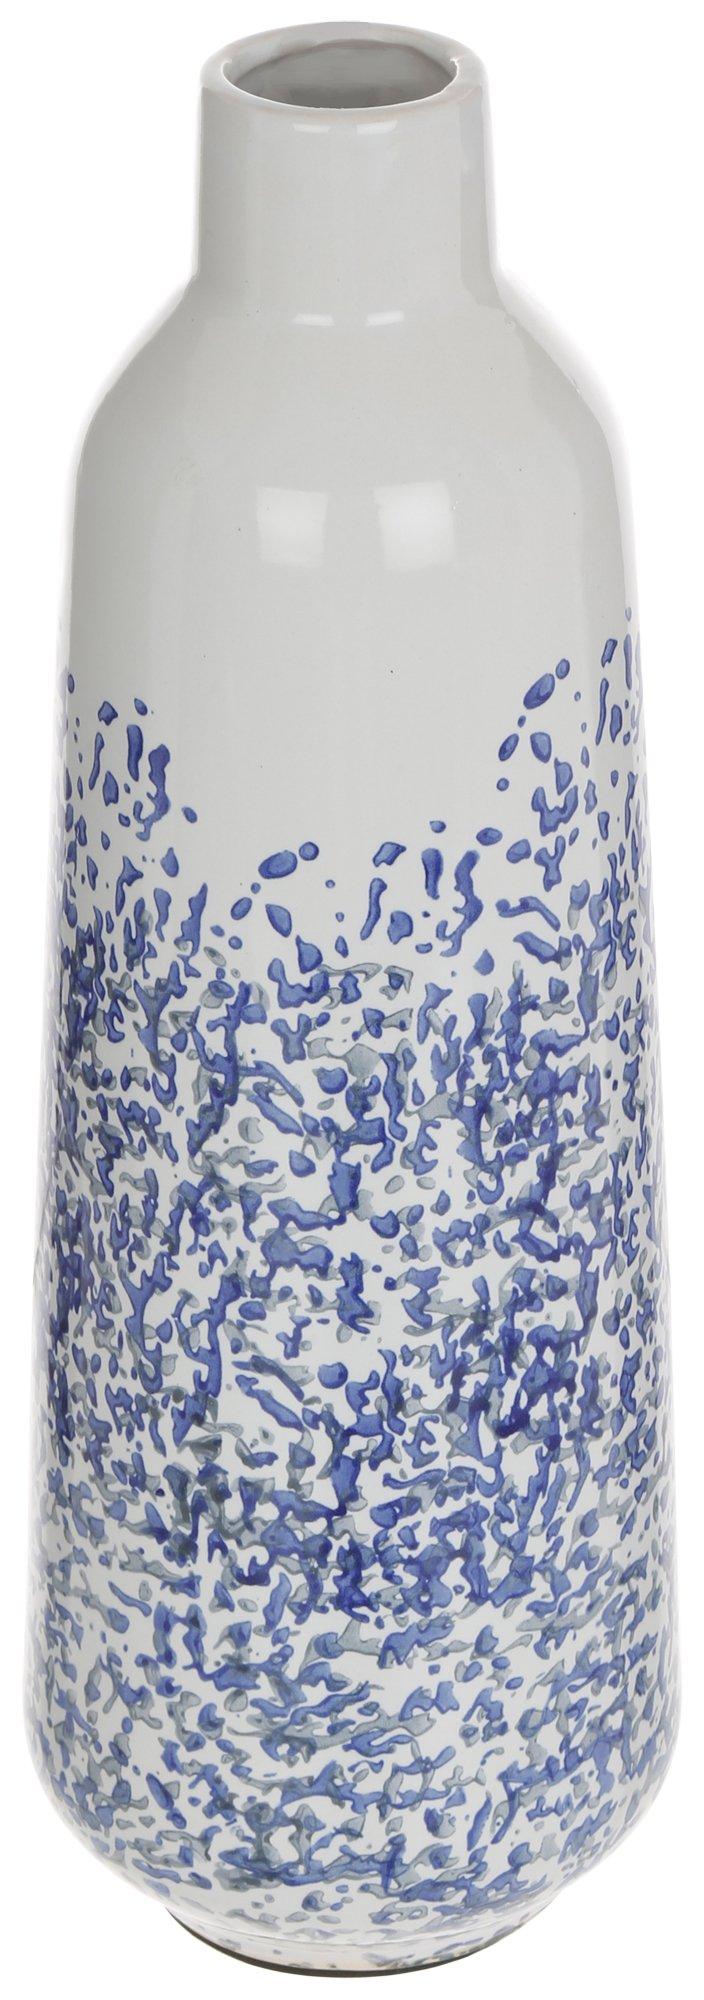 14in Ceramic Decorative Vase